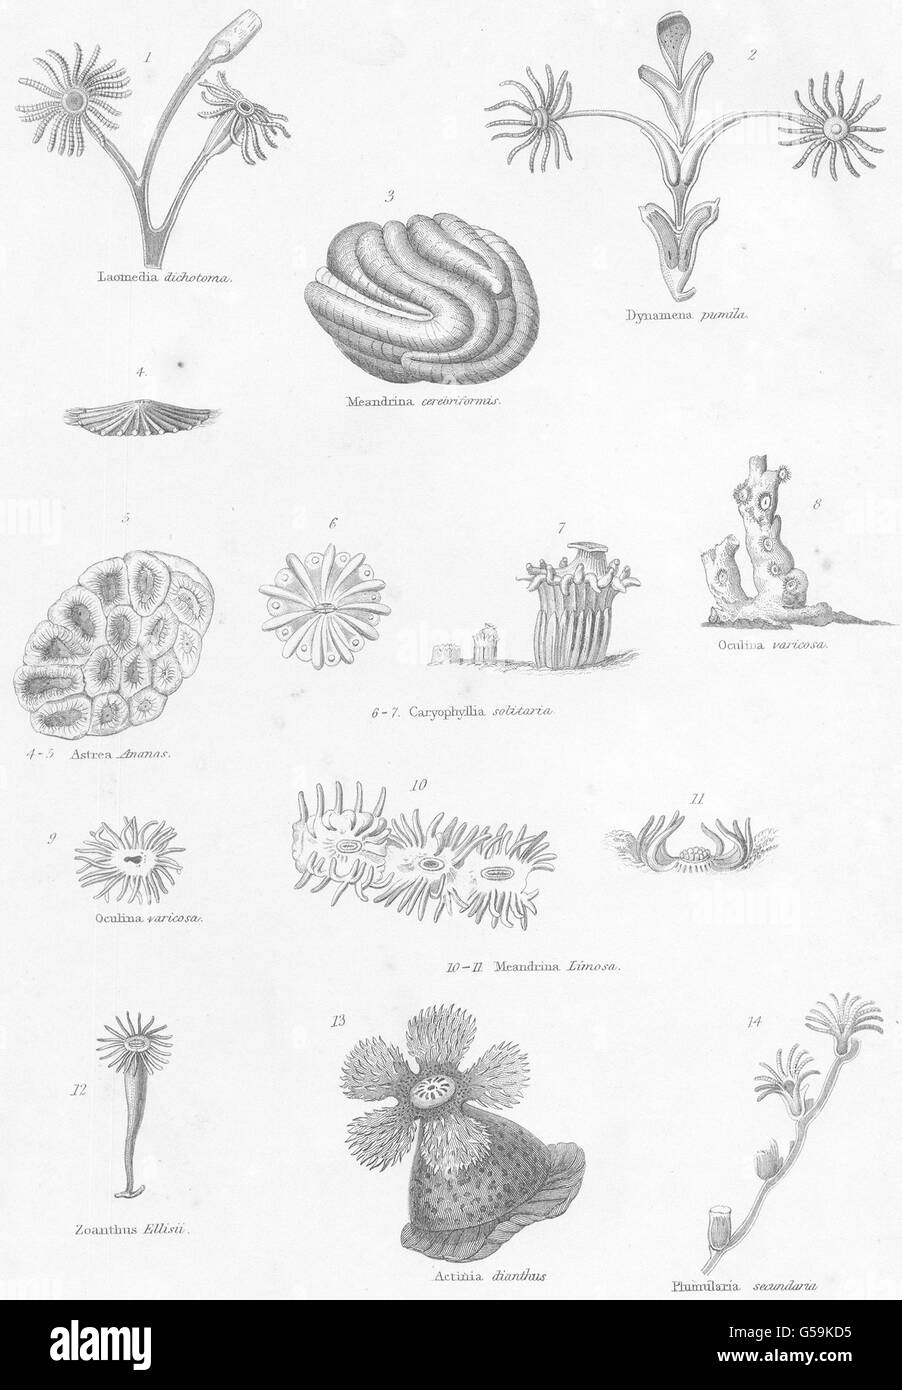 Polypes : Laomedia dichotoma, Dynamena pumila ; Meandrina cerebriformis, 1860 Banque D'Images